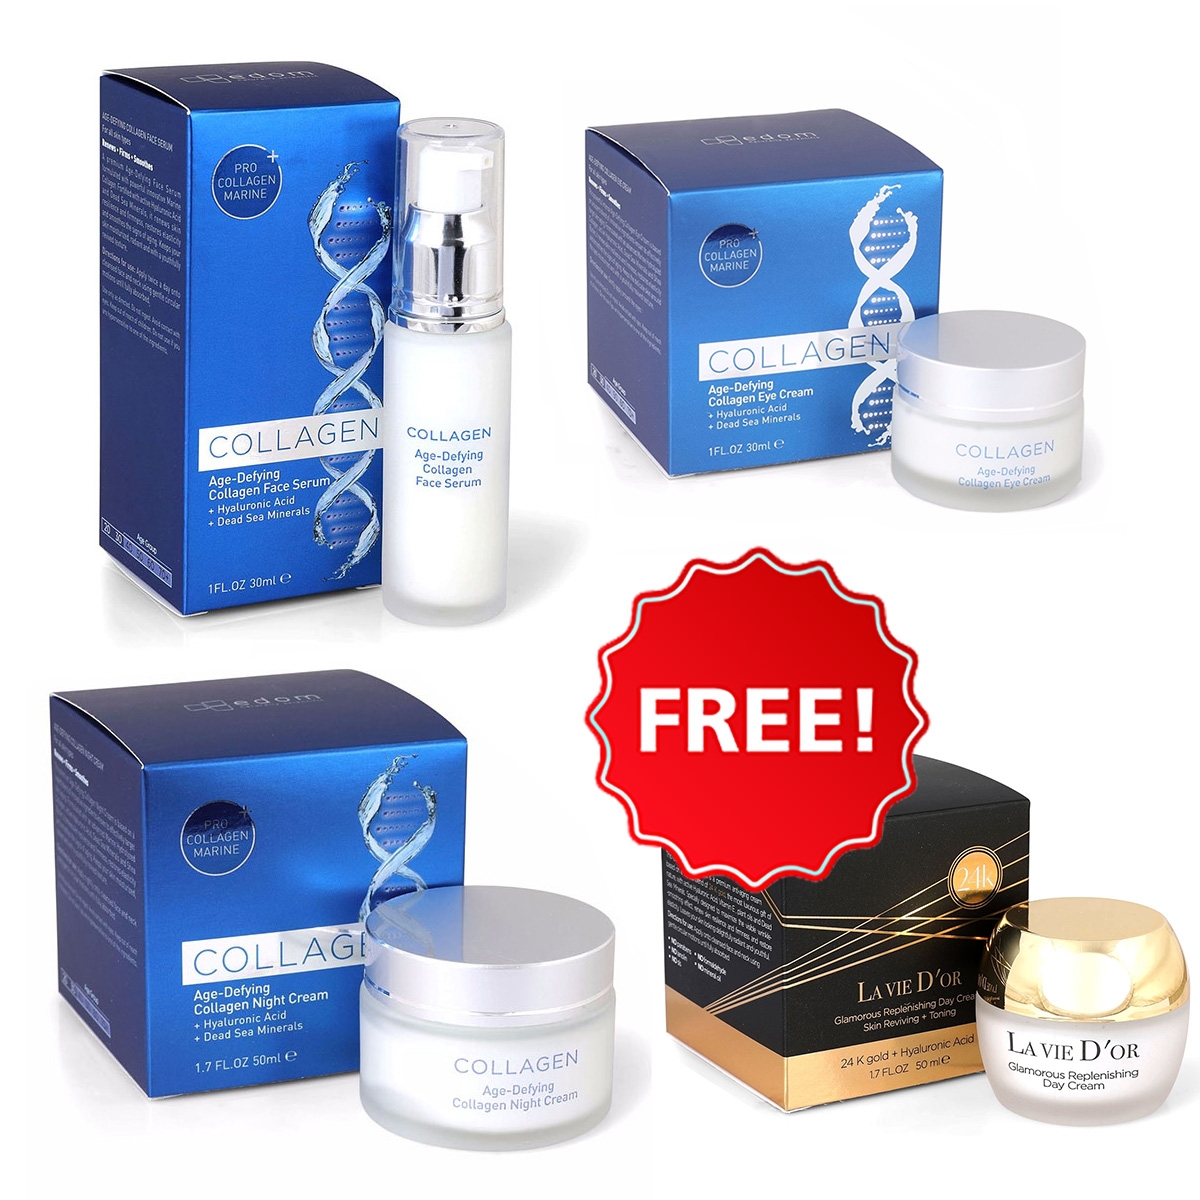 Edom Collagen Set: Buy Age-Defying Night Cream, Face Serum, Eye Cream and get FREE La Vie D’Or Glamorous Replenishing Day Cream - 1